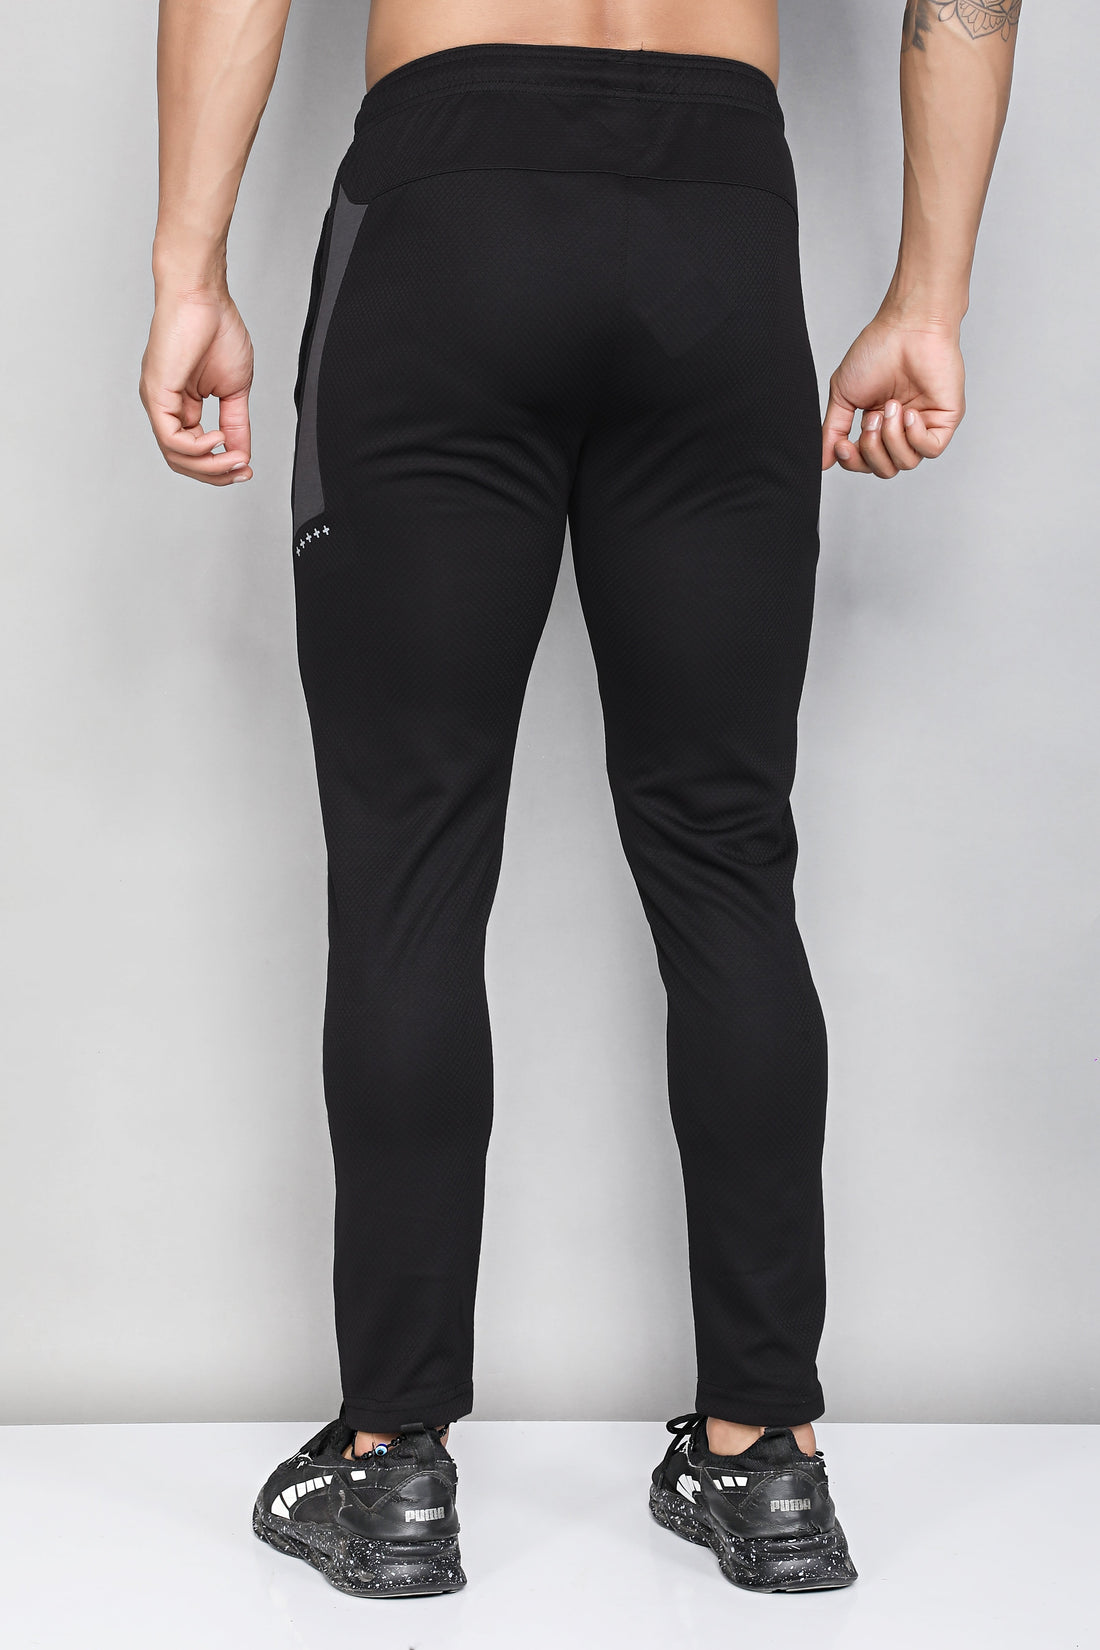 New look sports leggings - Activewear manufacturer Sportswear Manufacturer  HL